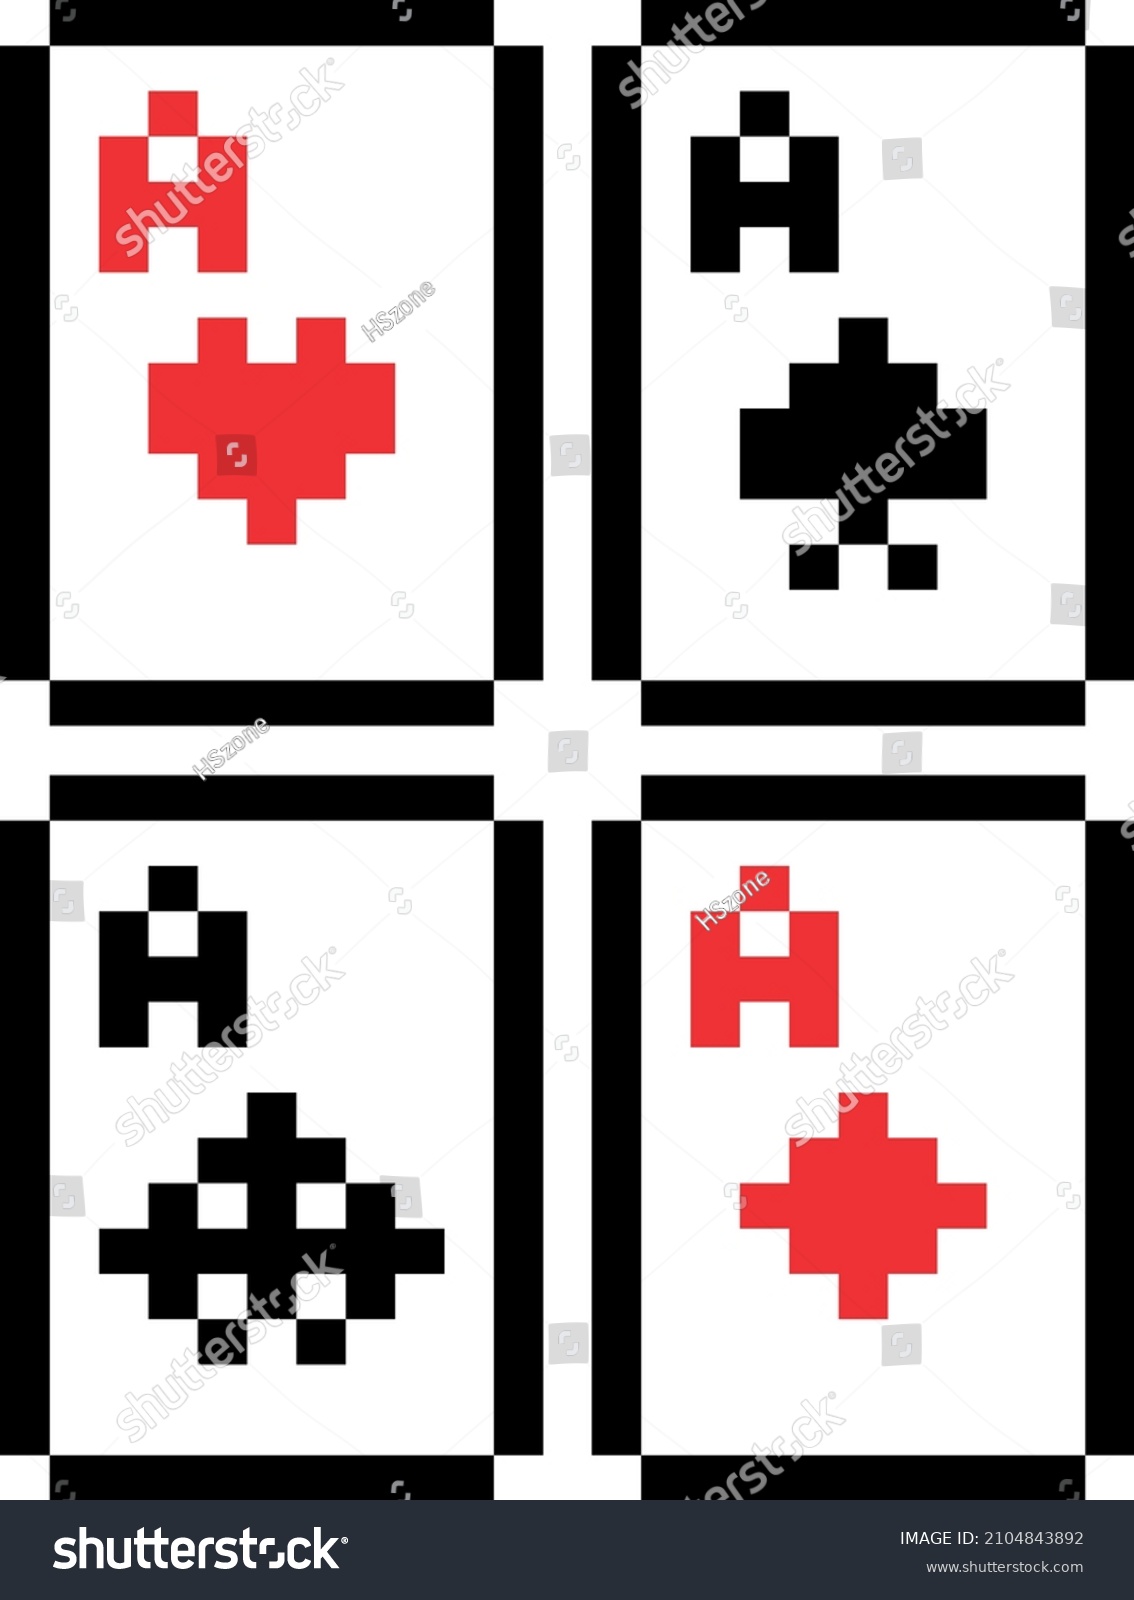 Playing Card Pixel Kunst Vektorgrafik Stock Vektorgrafik Lizenzfrei Shutterstock